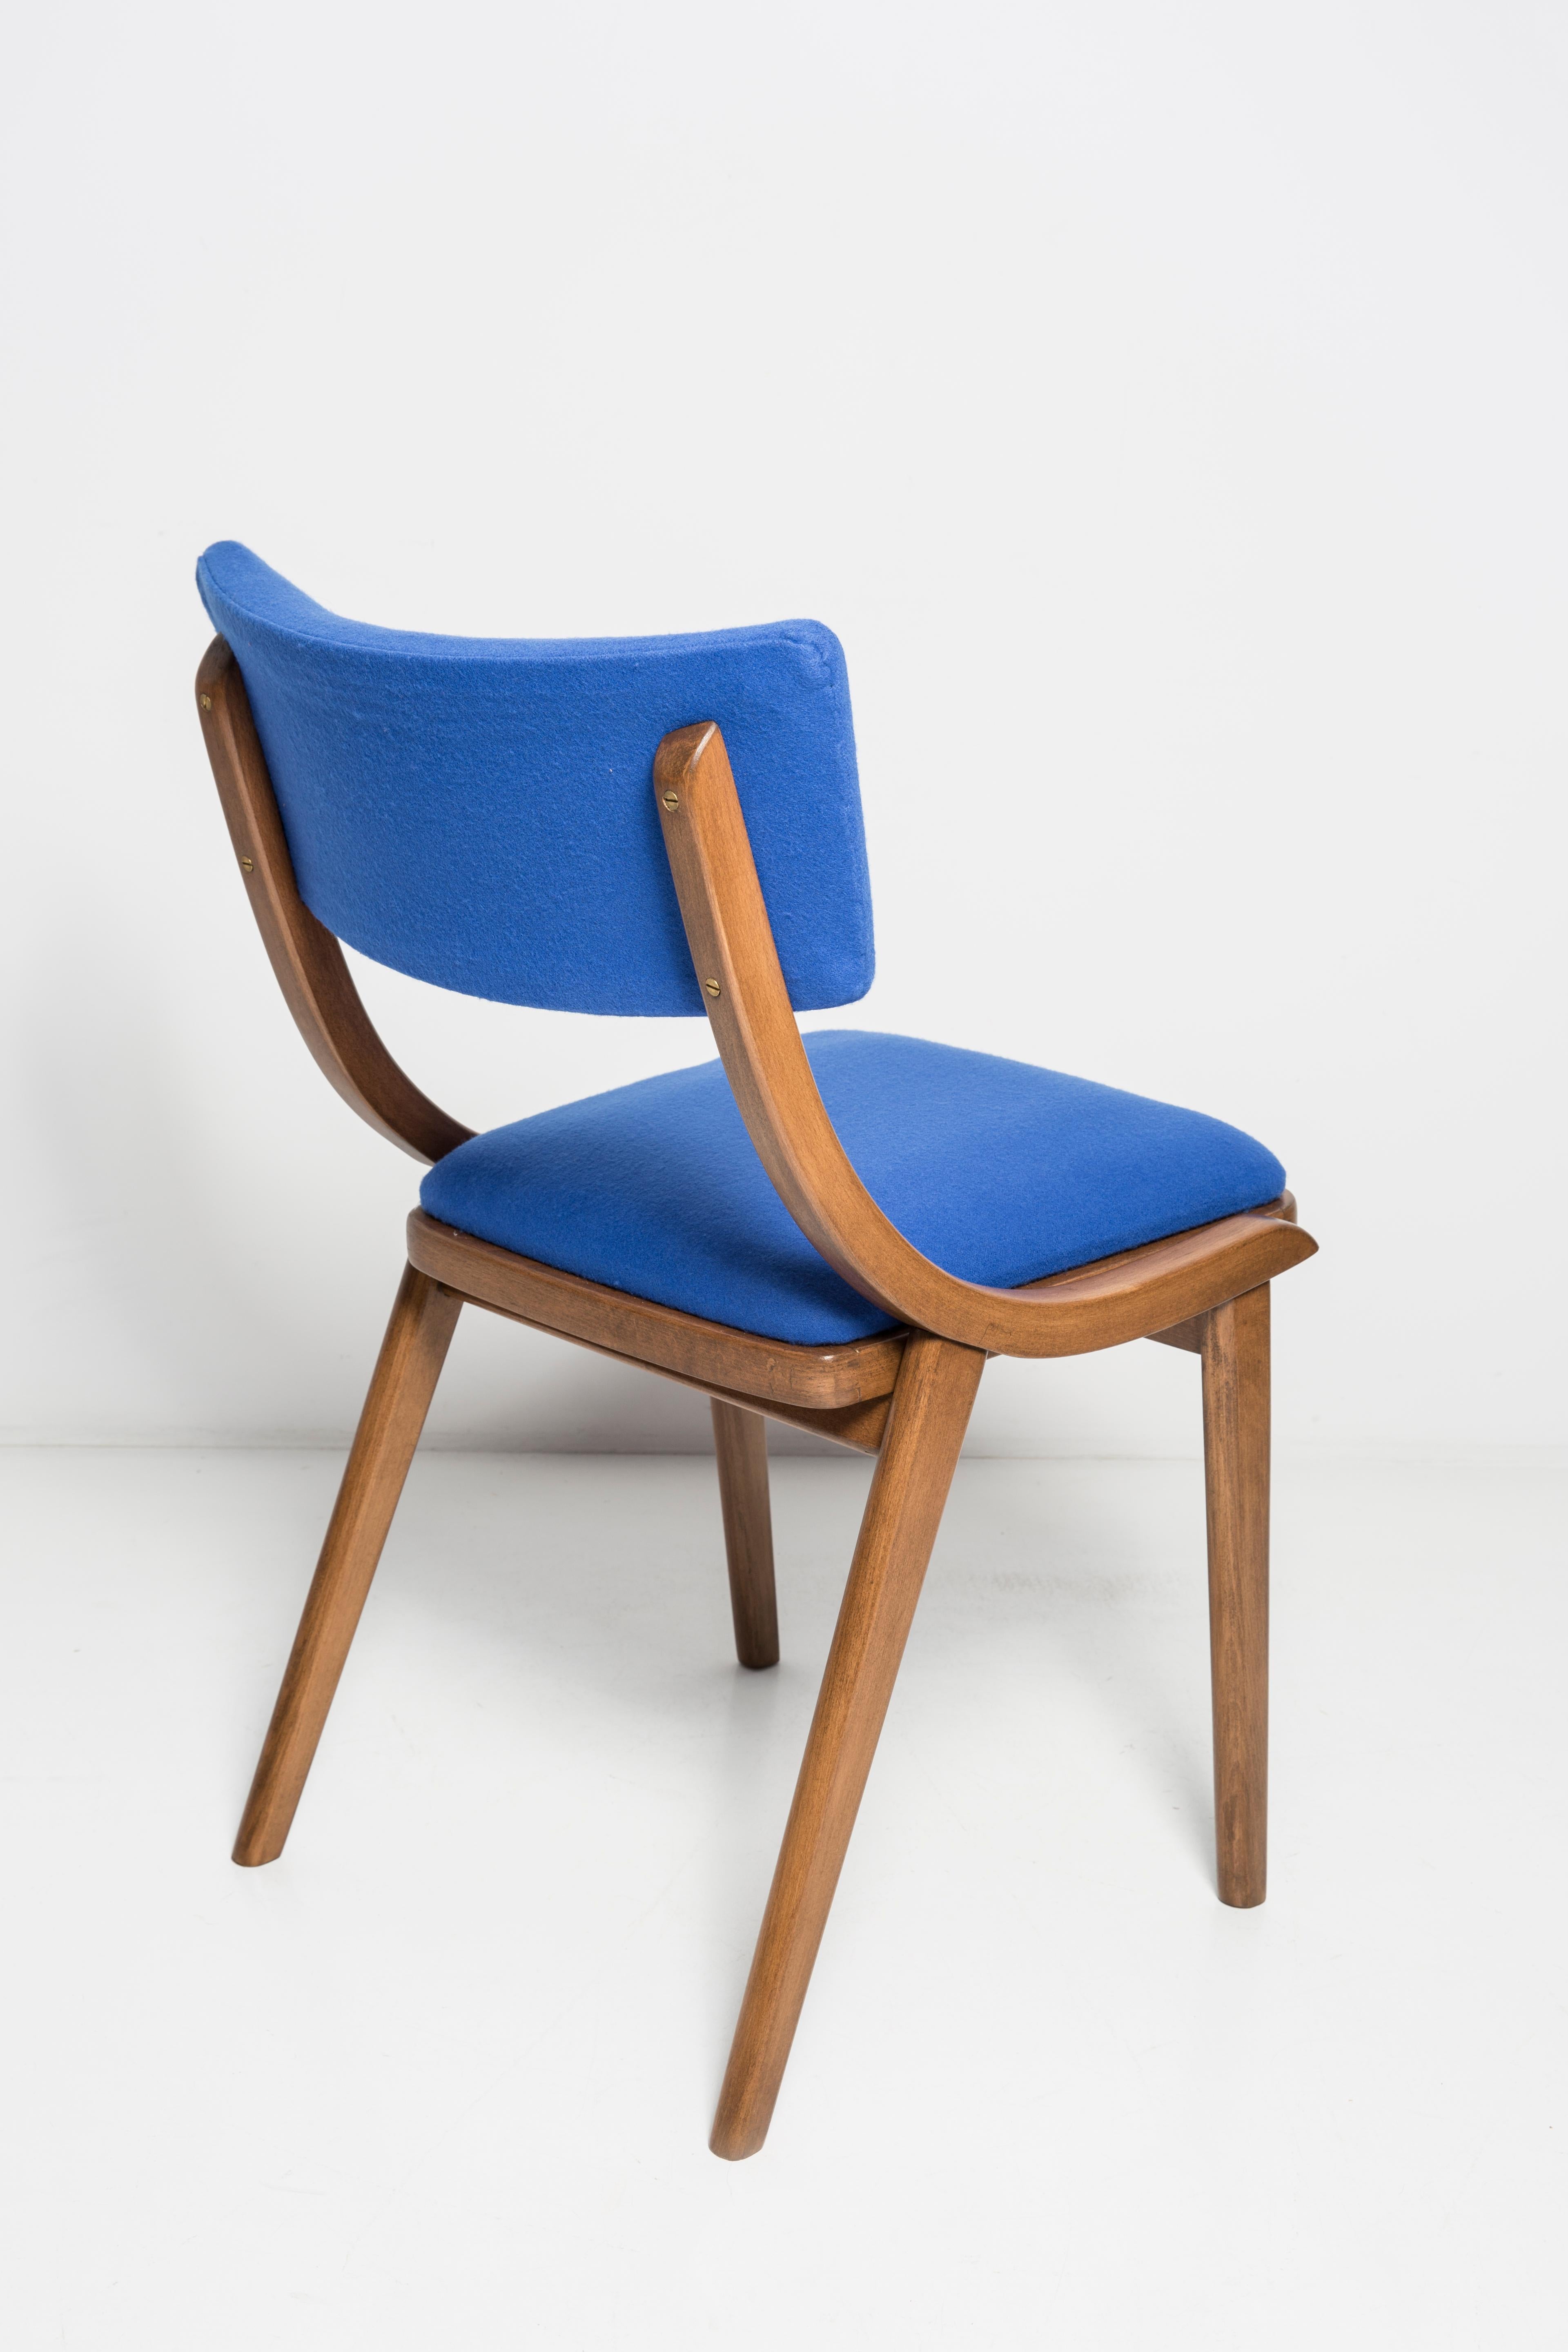 20th Century Mid Century Modern Bumerang Chair, Royal Blue Wool, Poland, 1960s For Sale